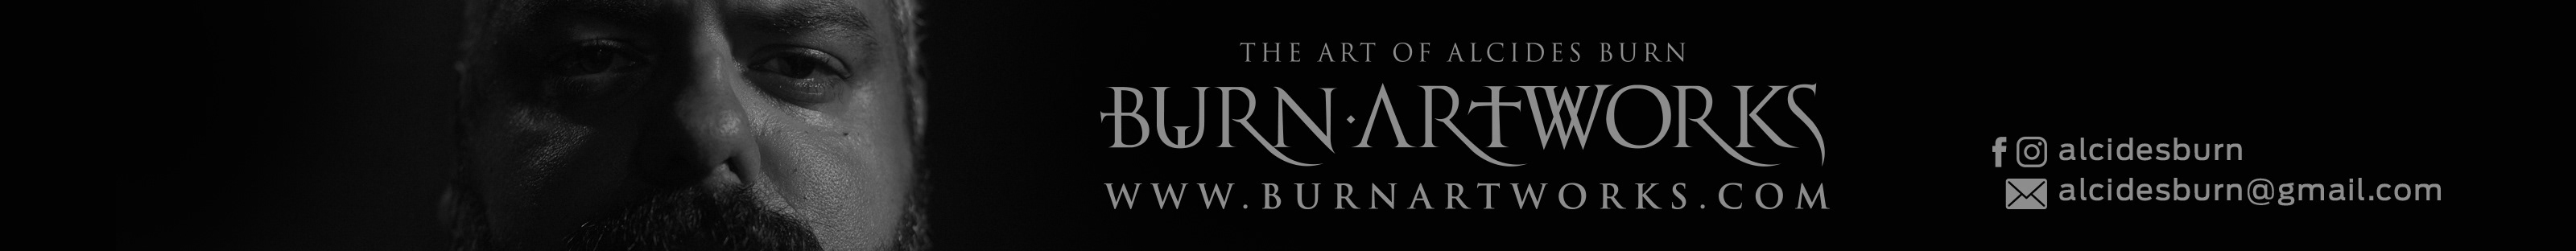 Alcides Burn's profile banner